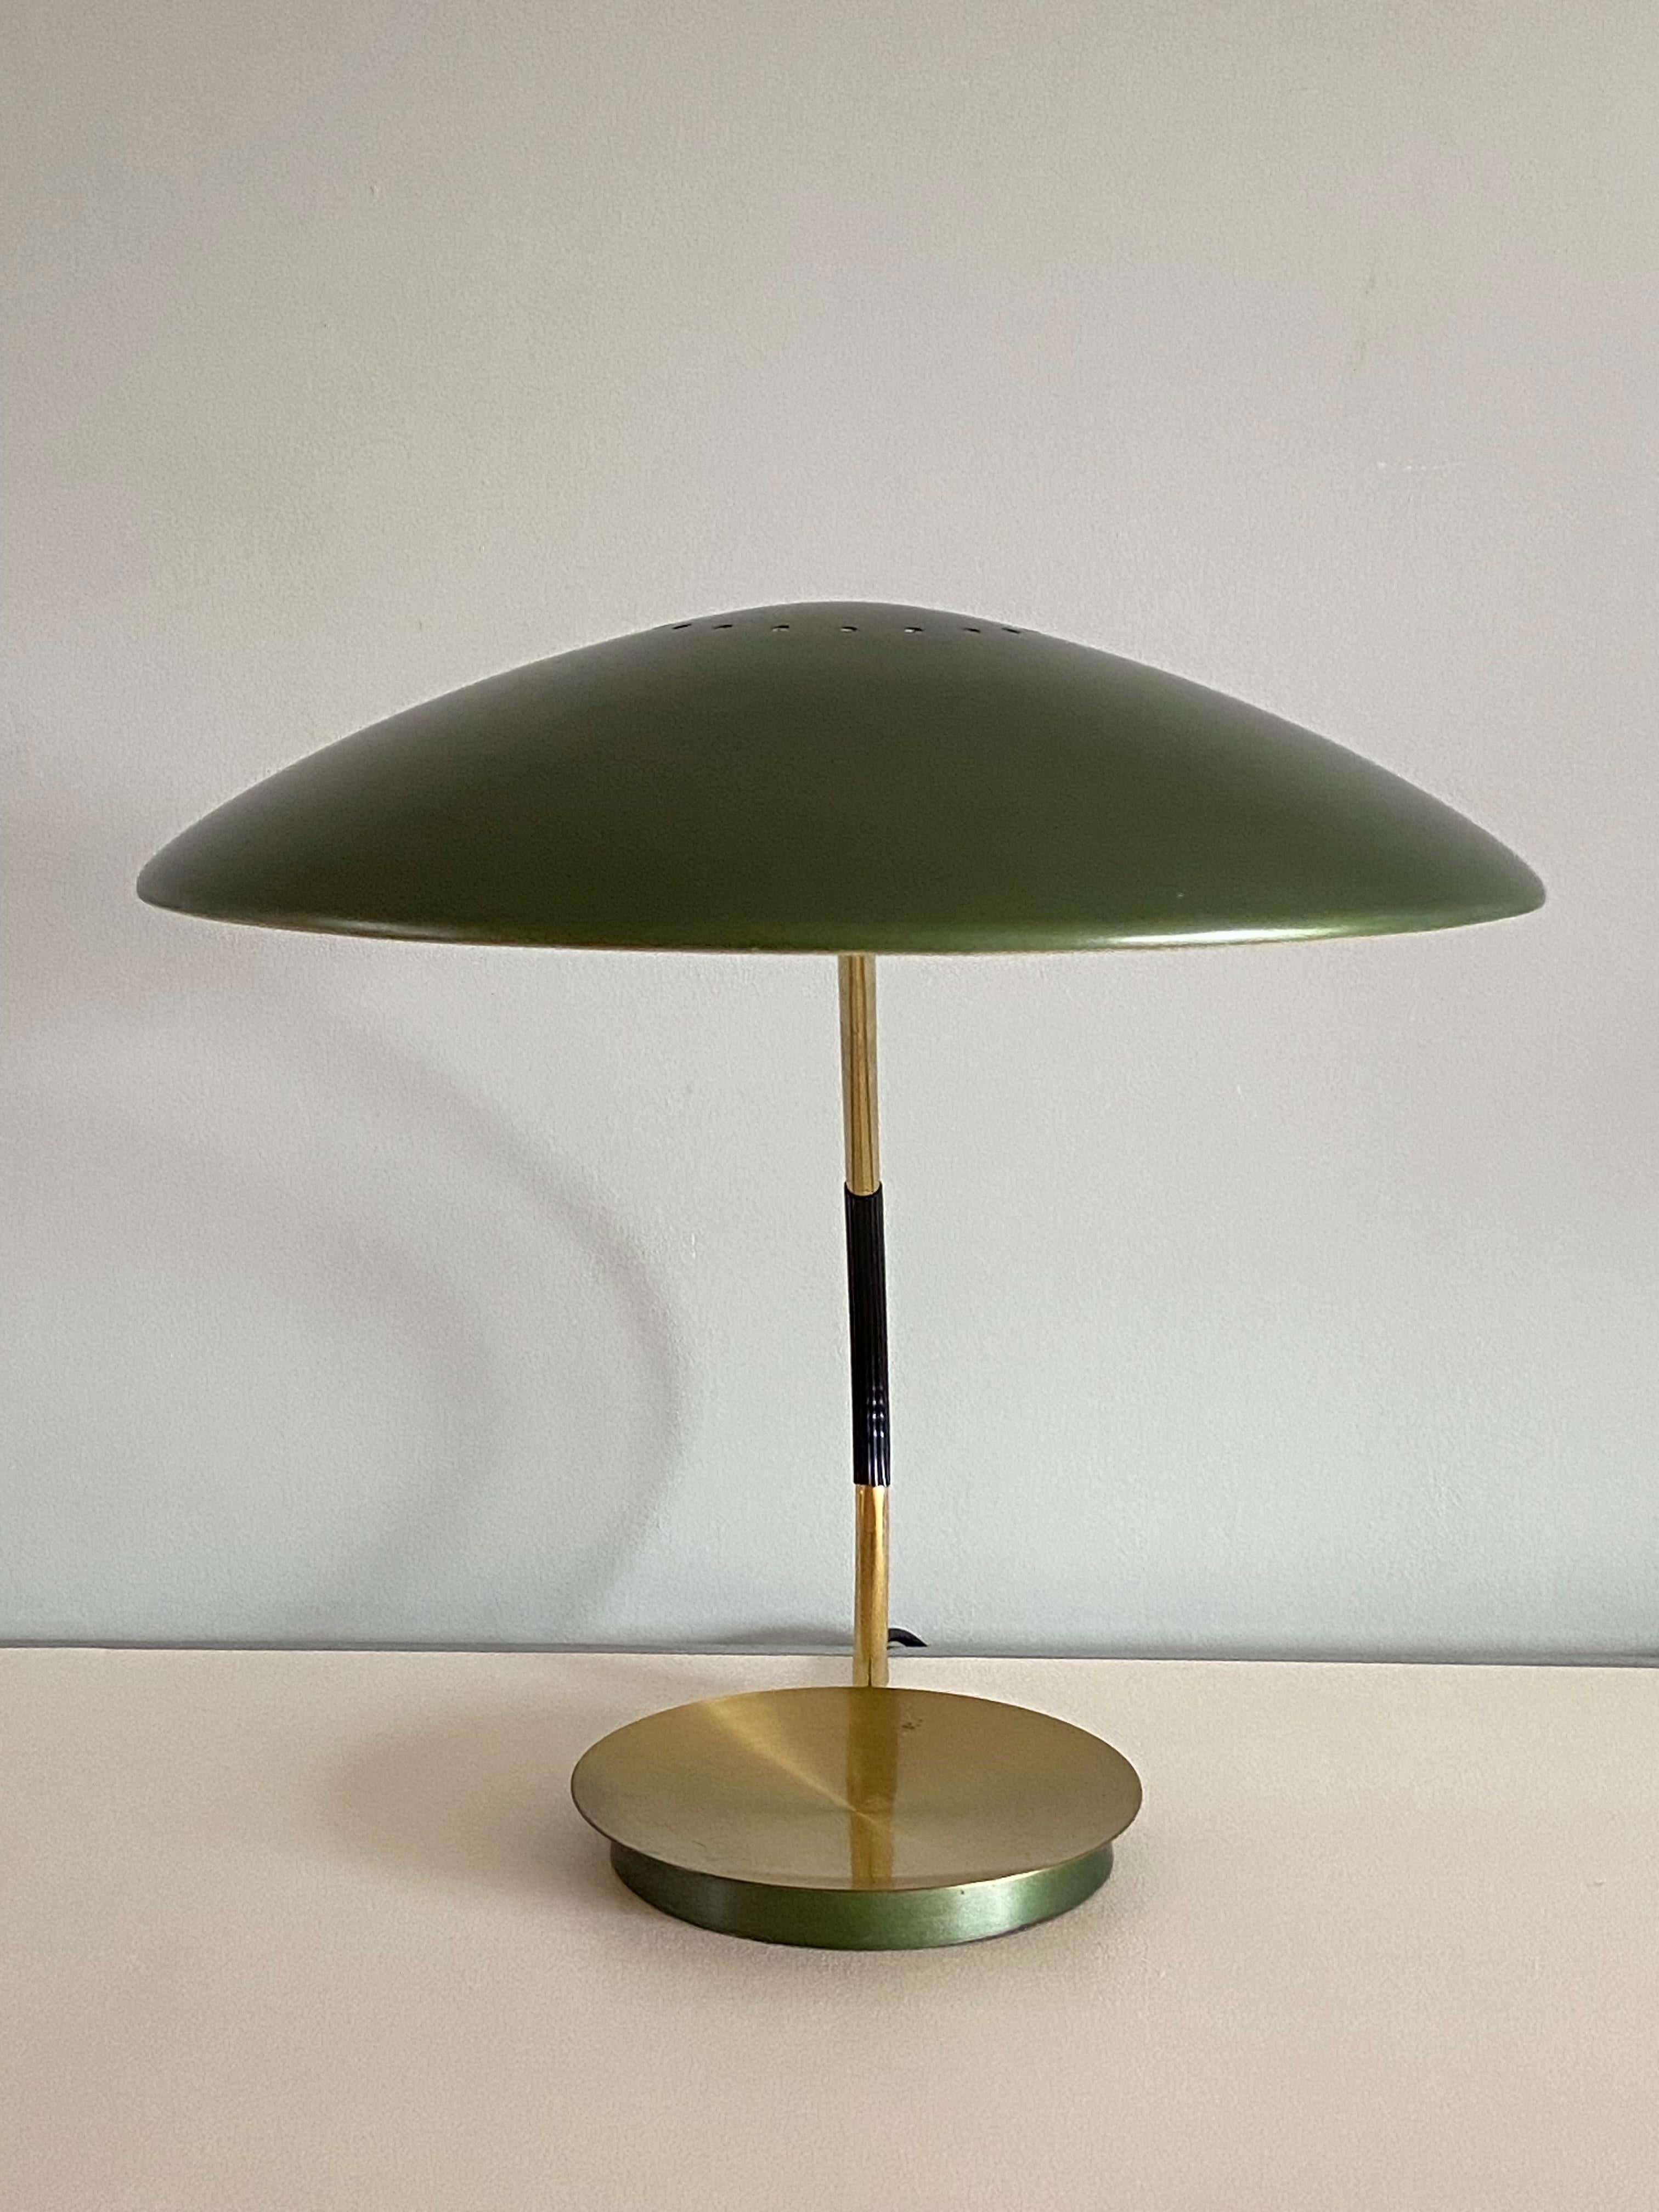 Christian Dell Table Lamp 6787 Desk Lamp by Kaiser Idell, 1950s, Germany 4